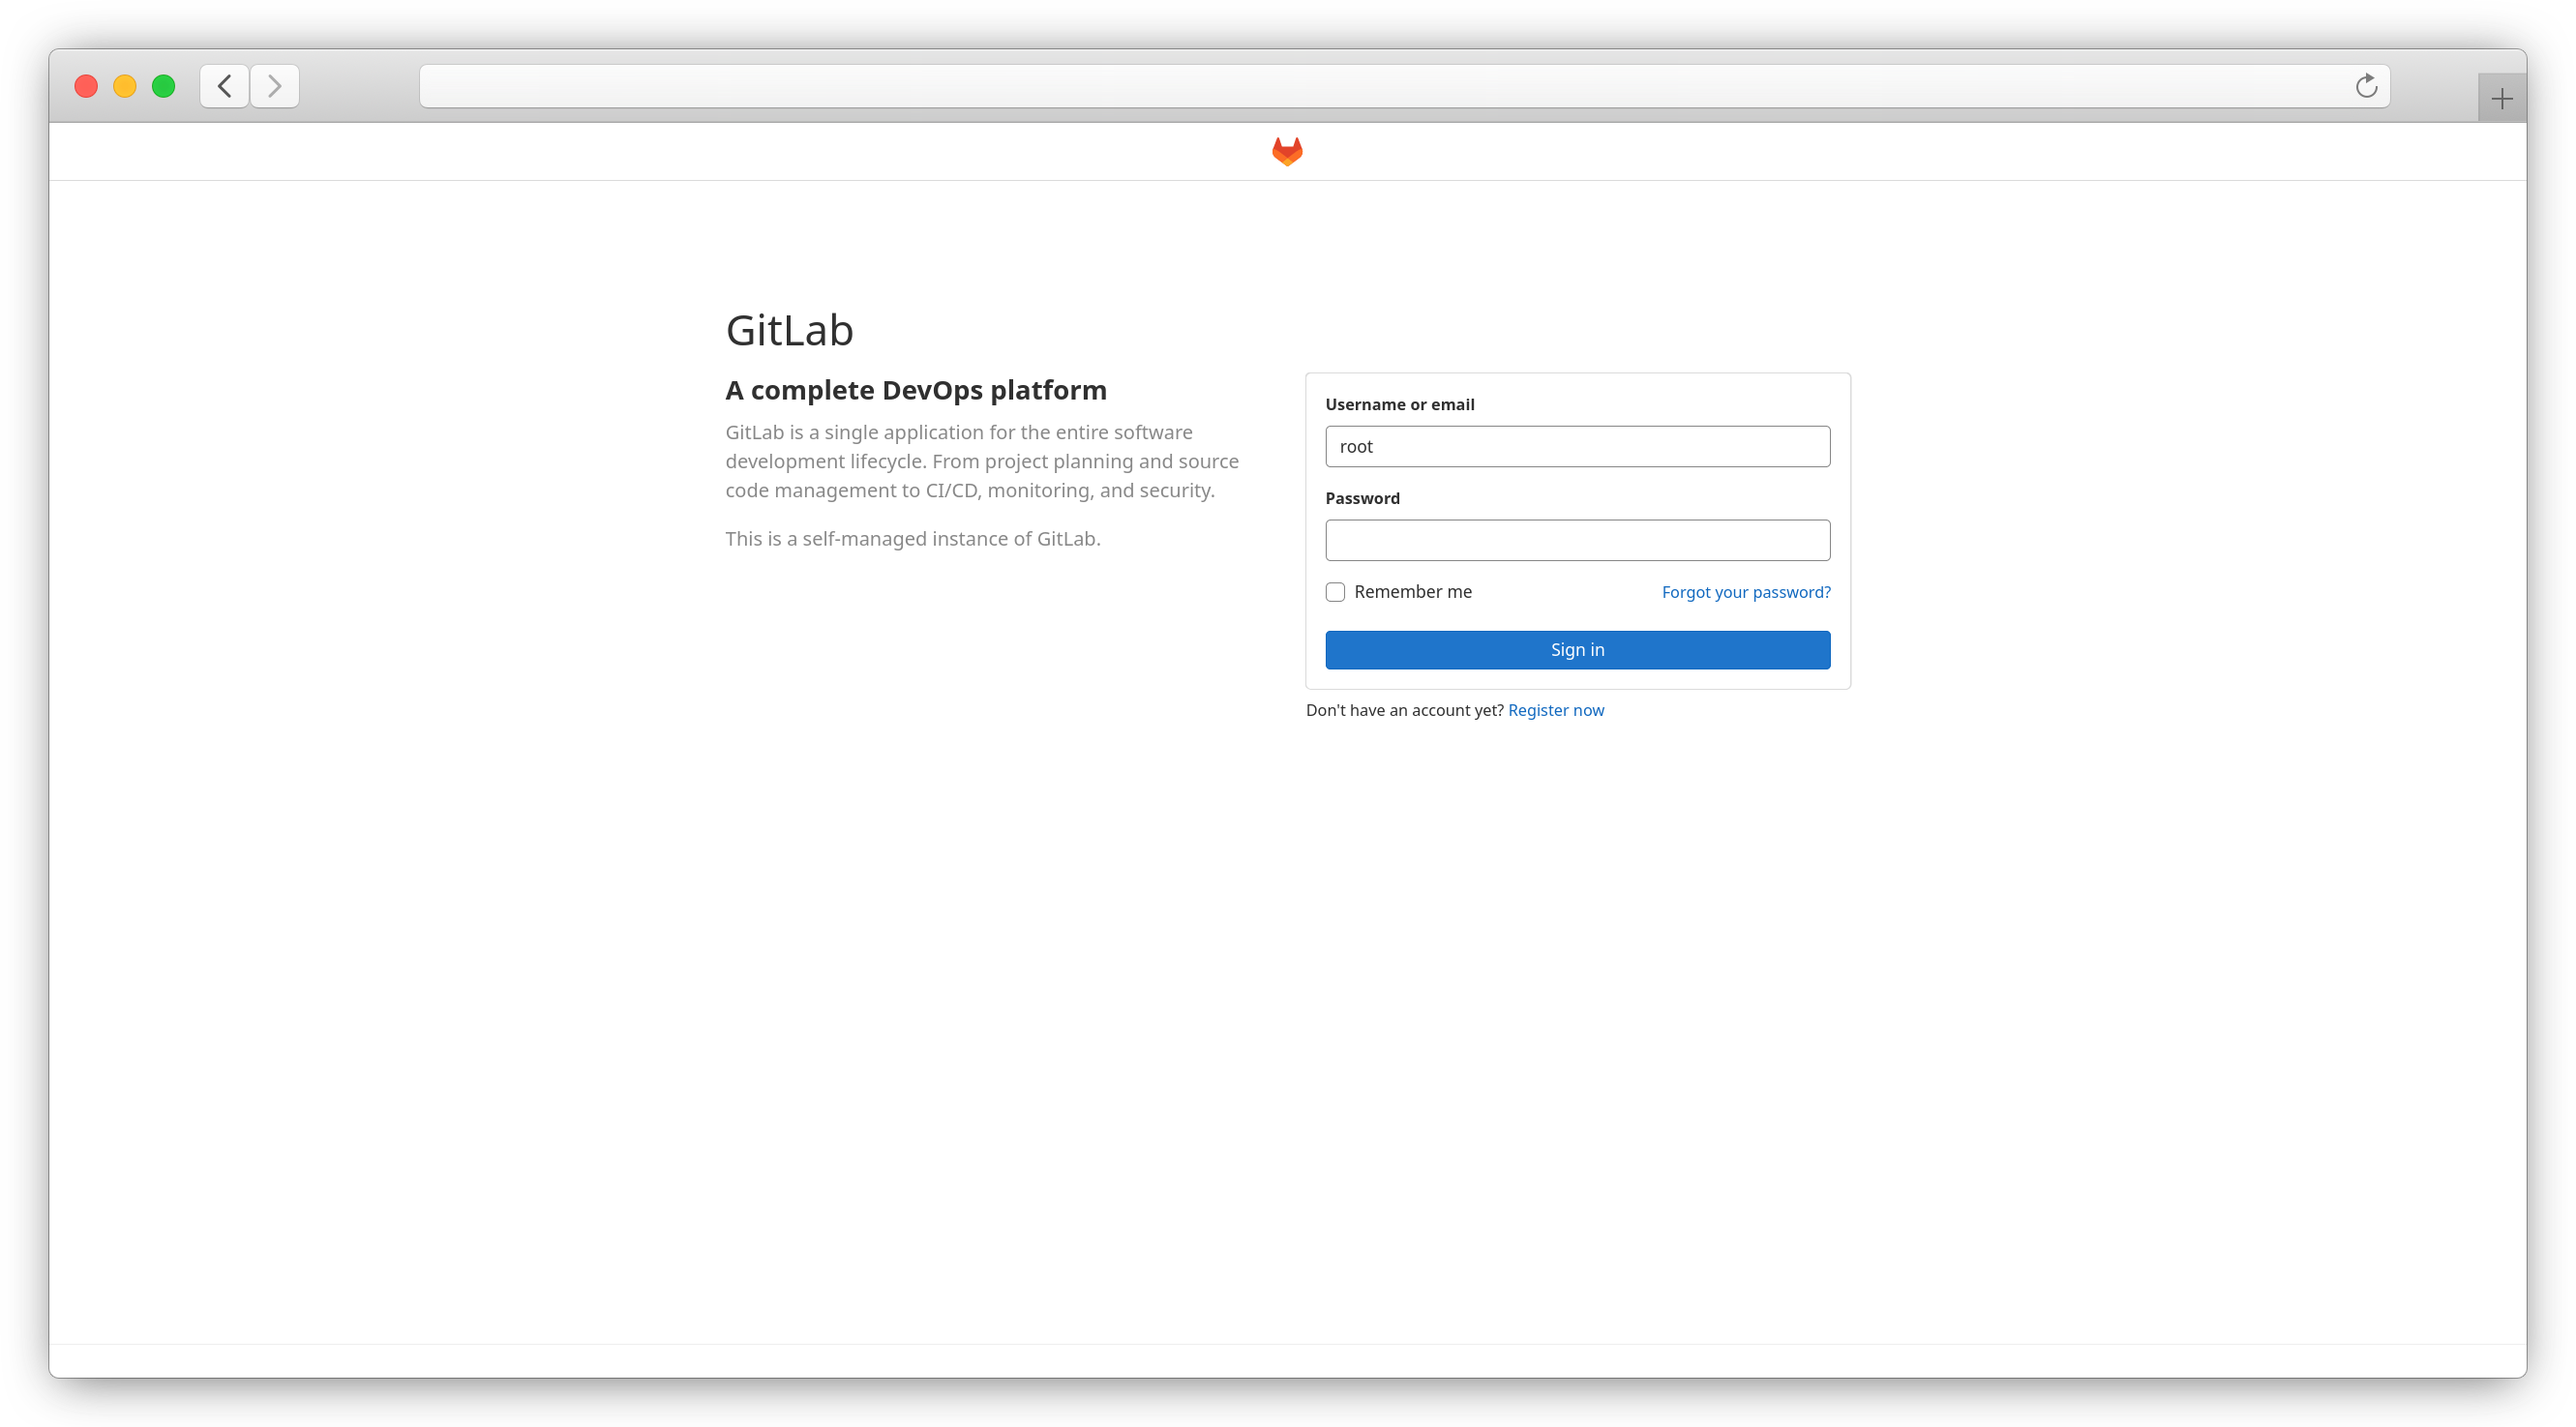 GitLab login screen